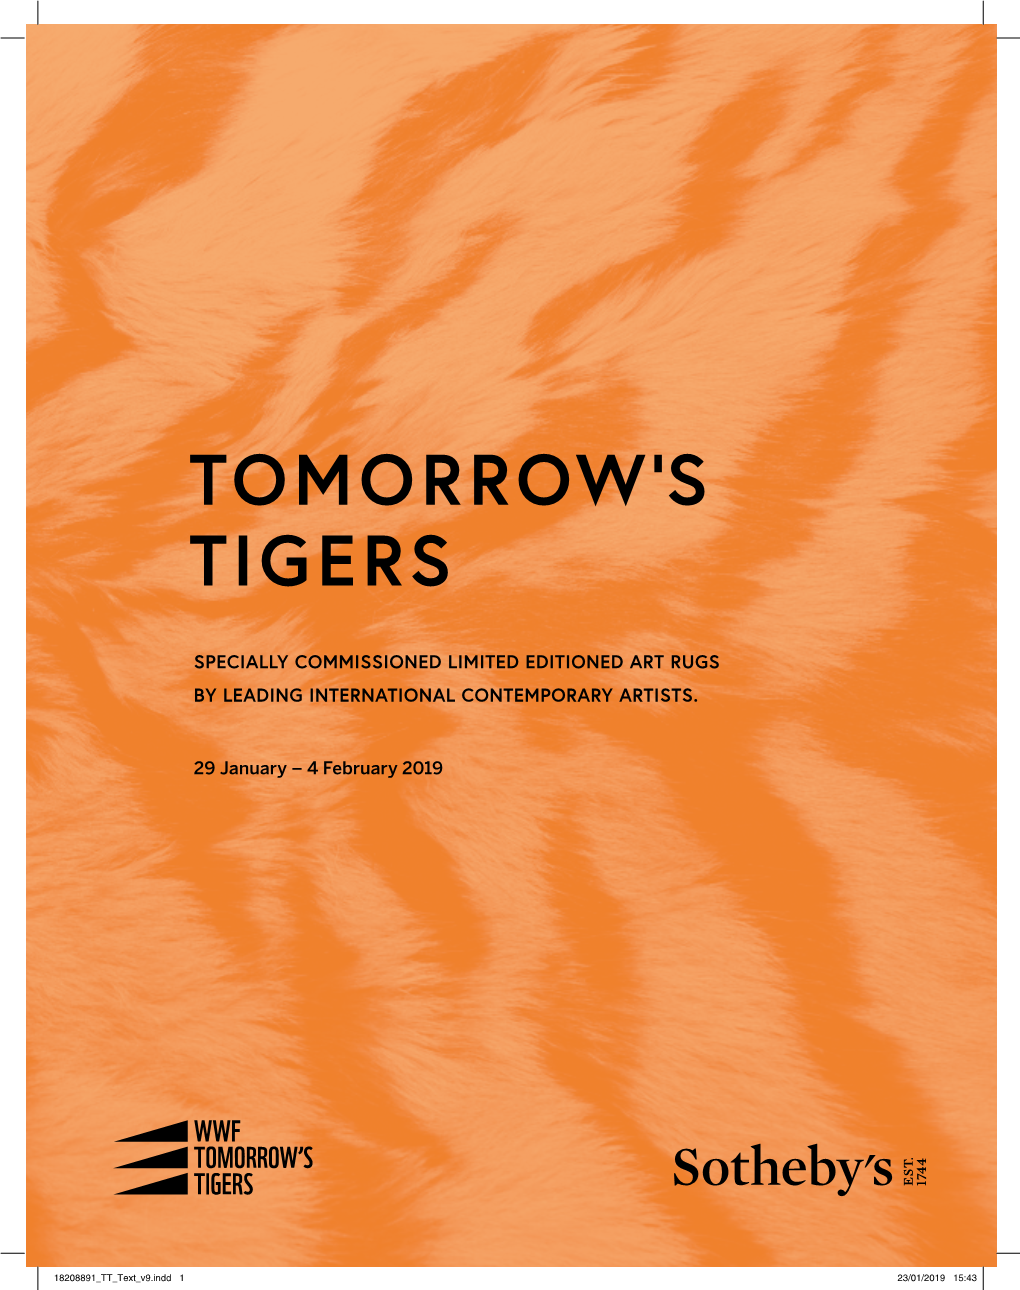 Tomorrow's Tigers Catalogue